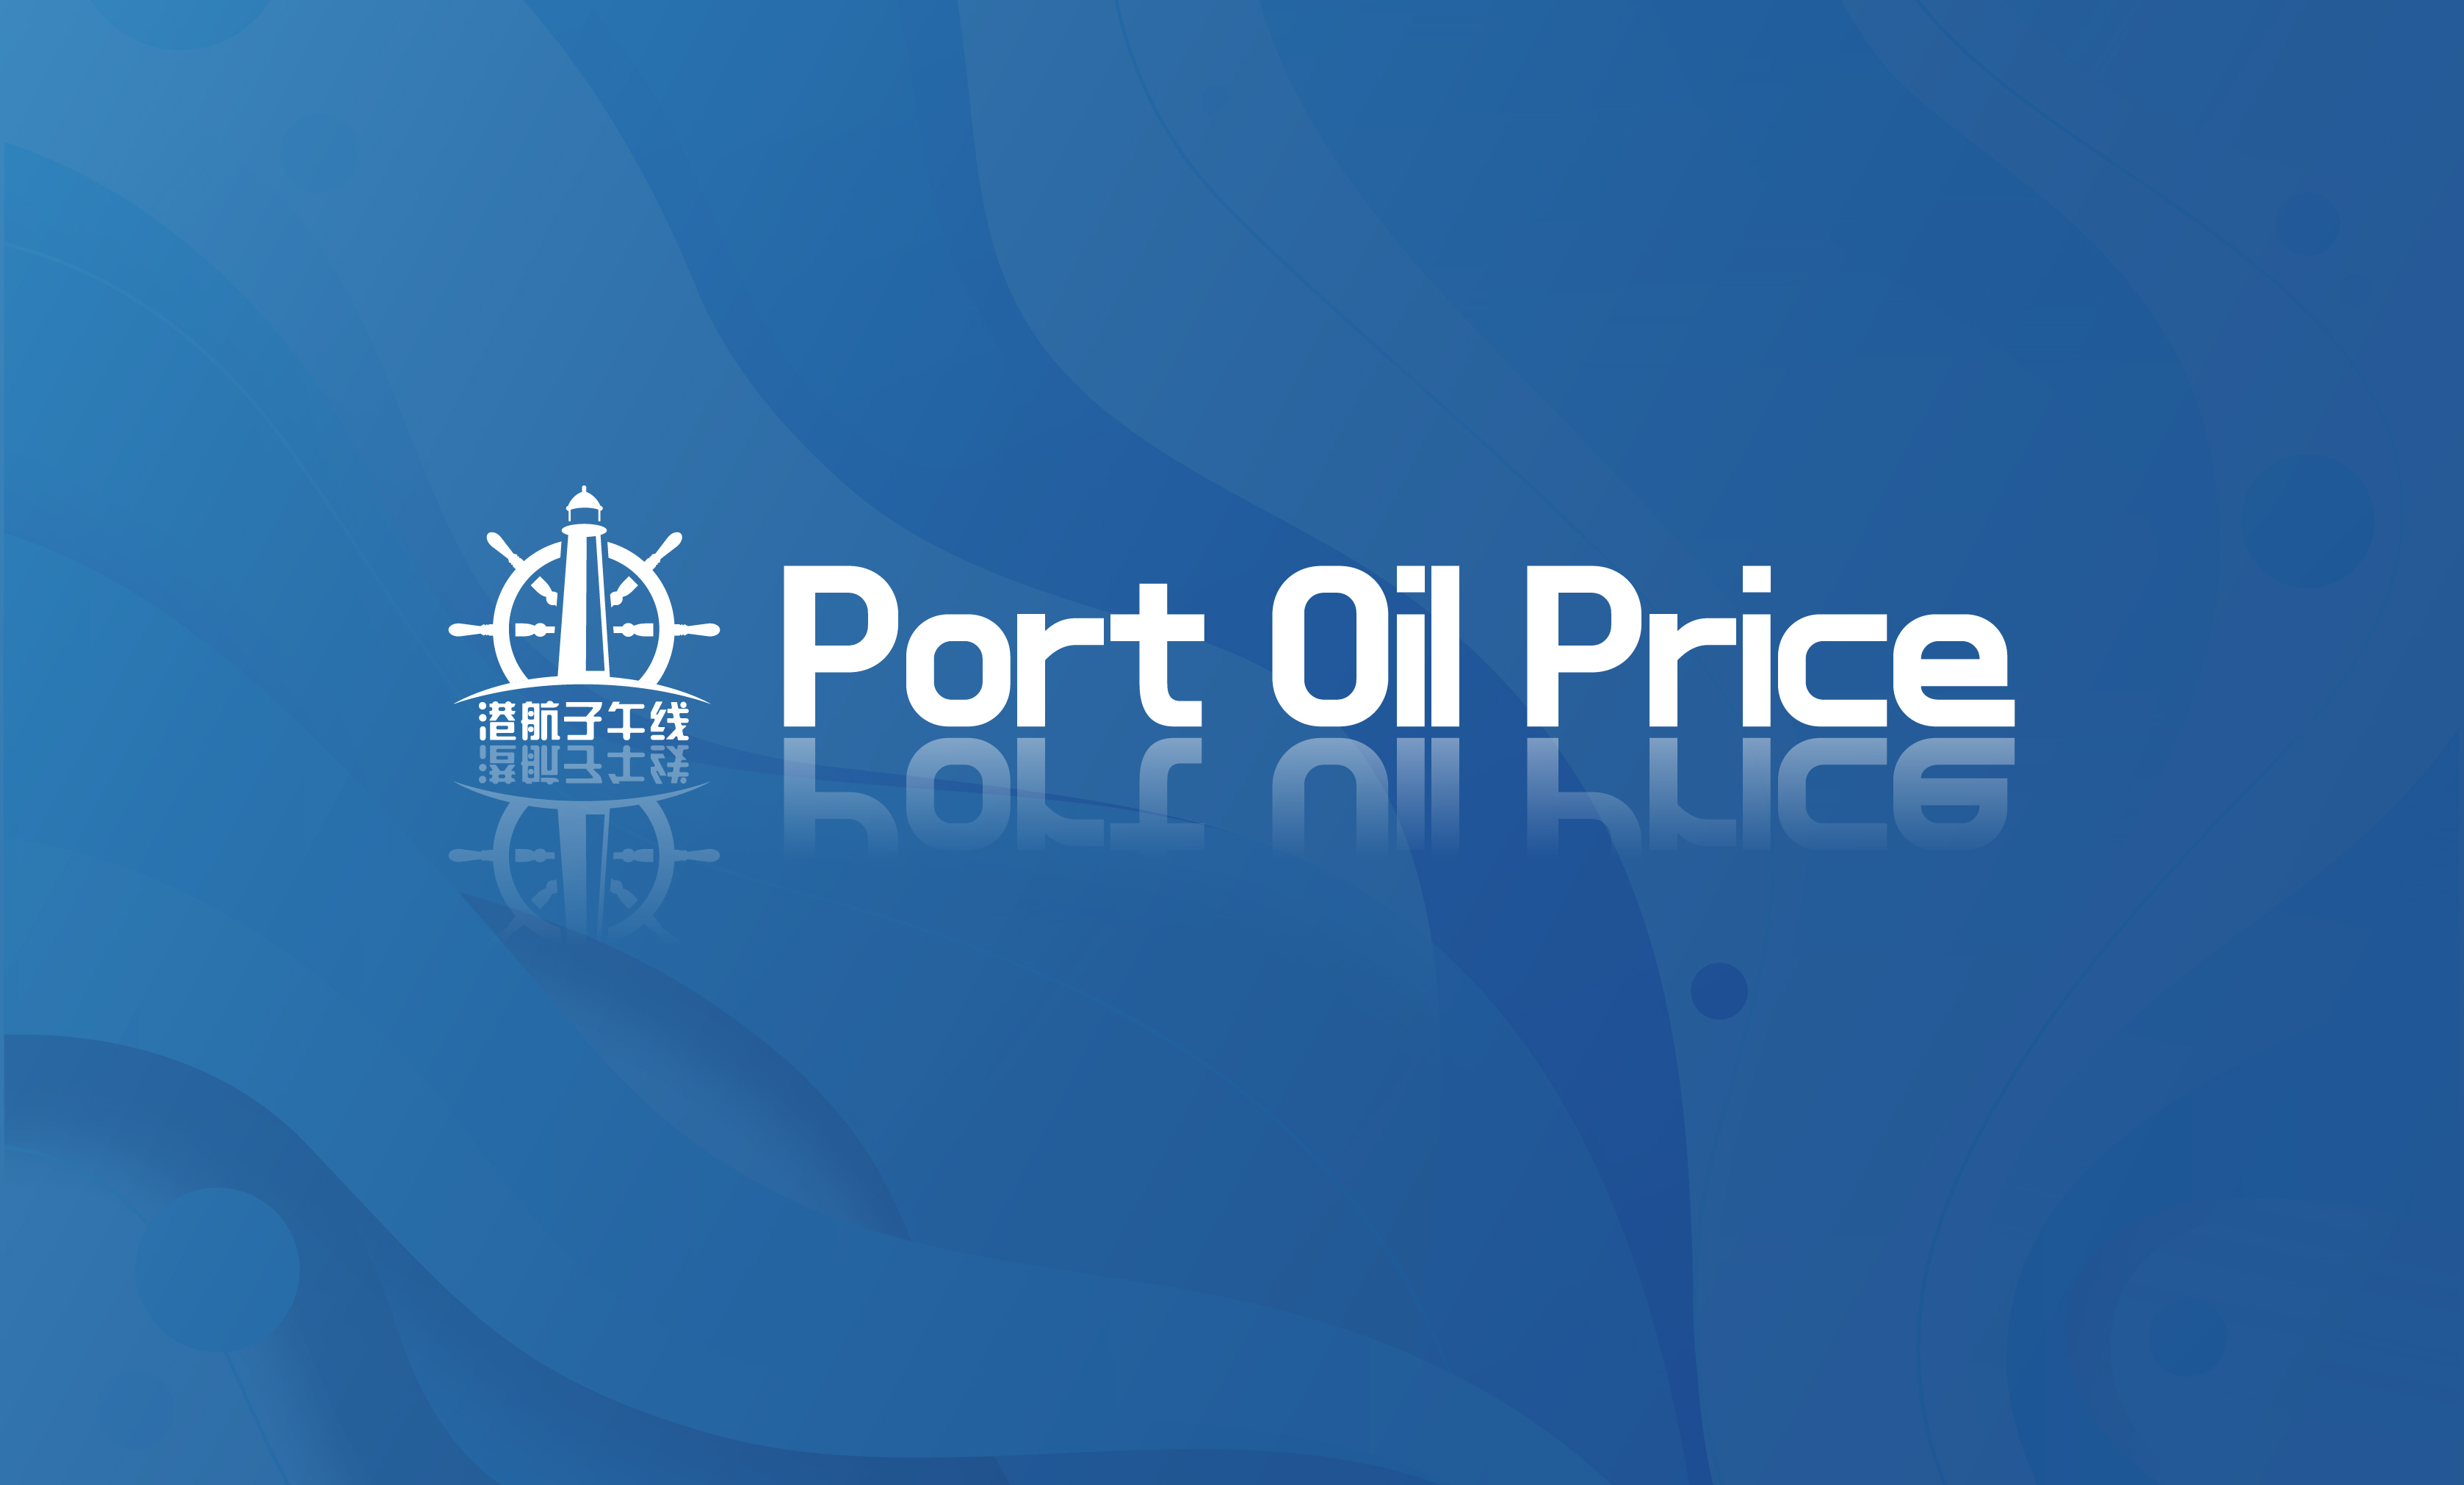 9/28 Oil Price for Global Popular Ports